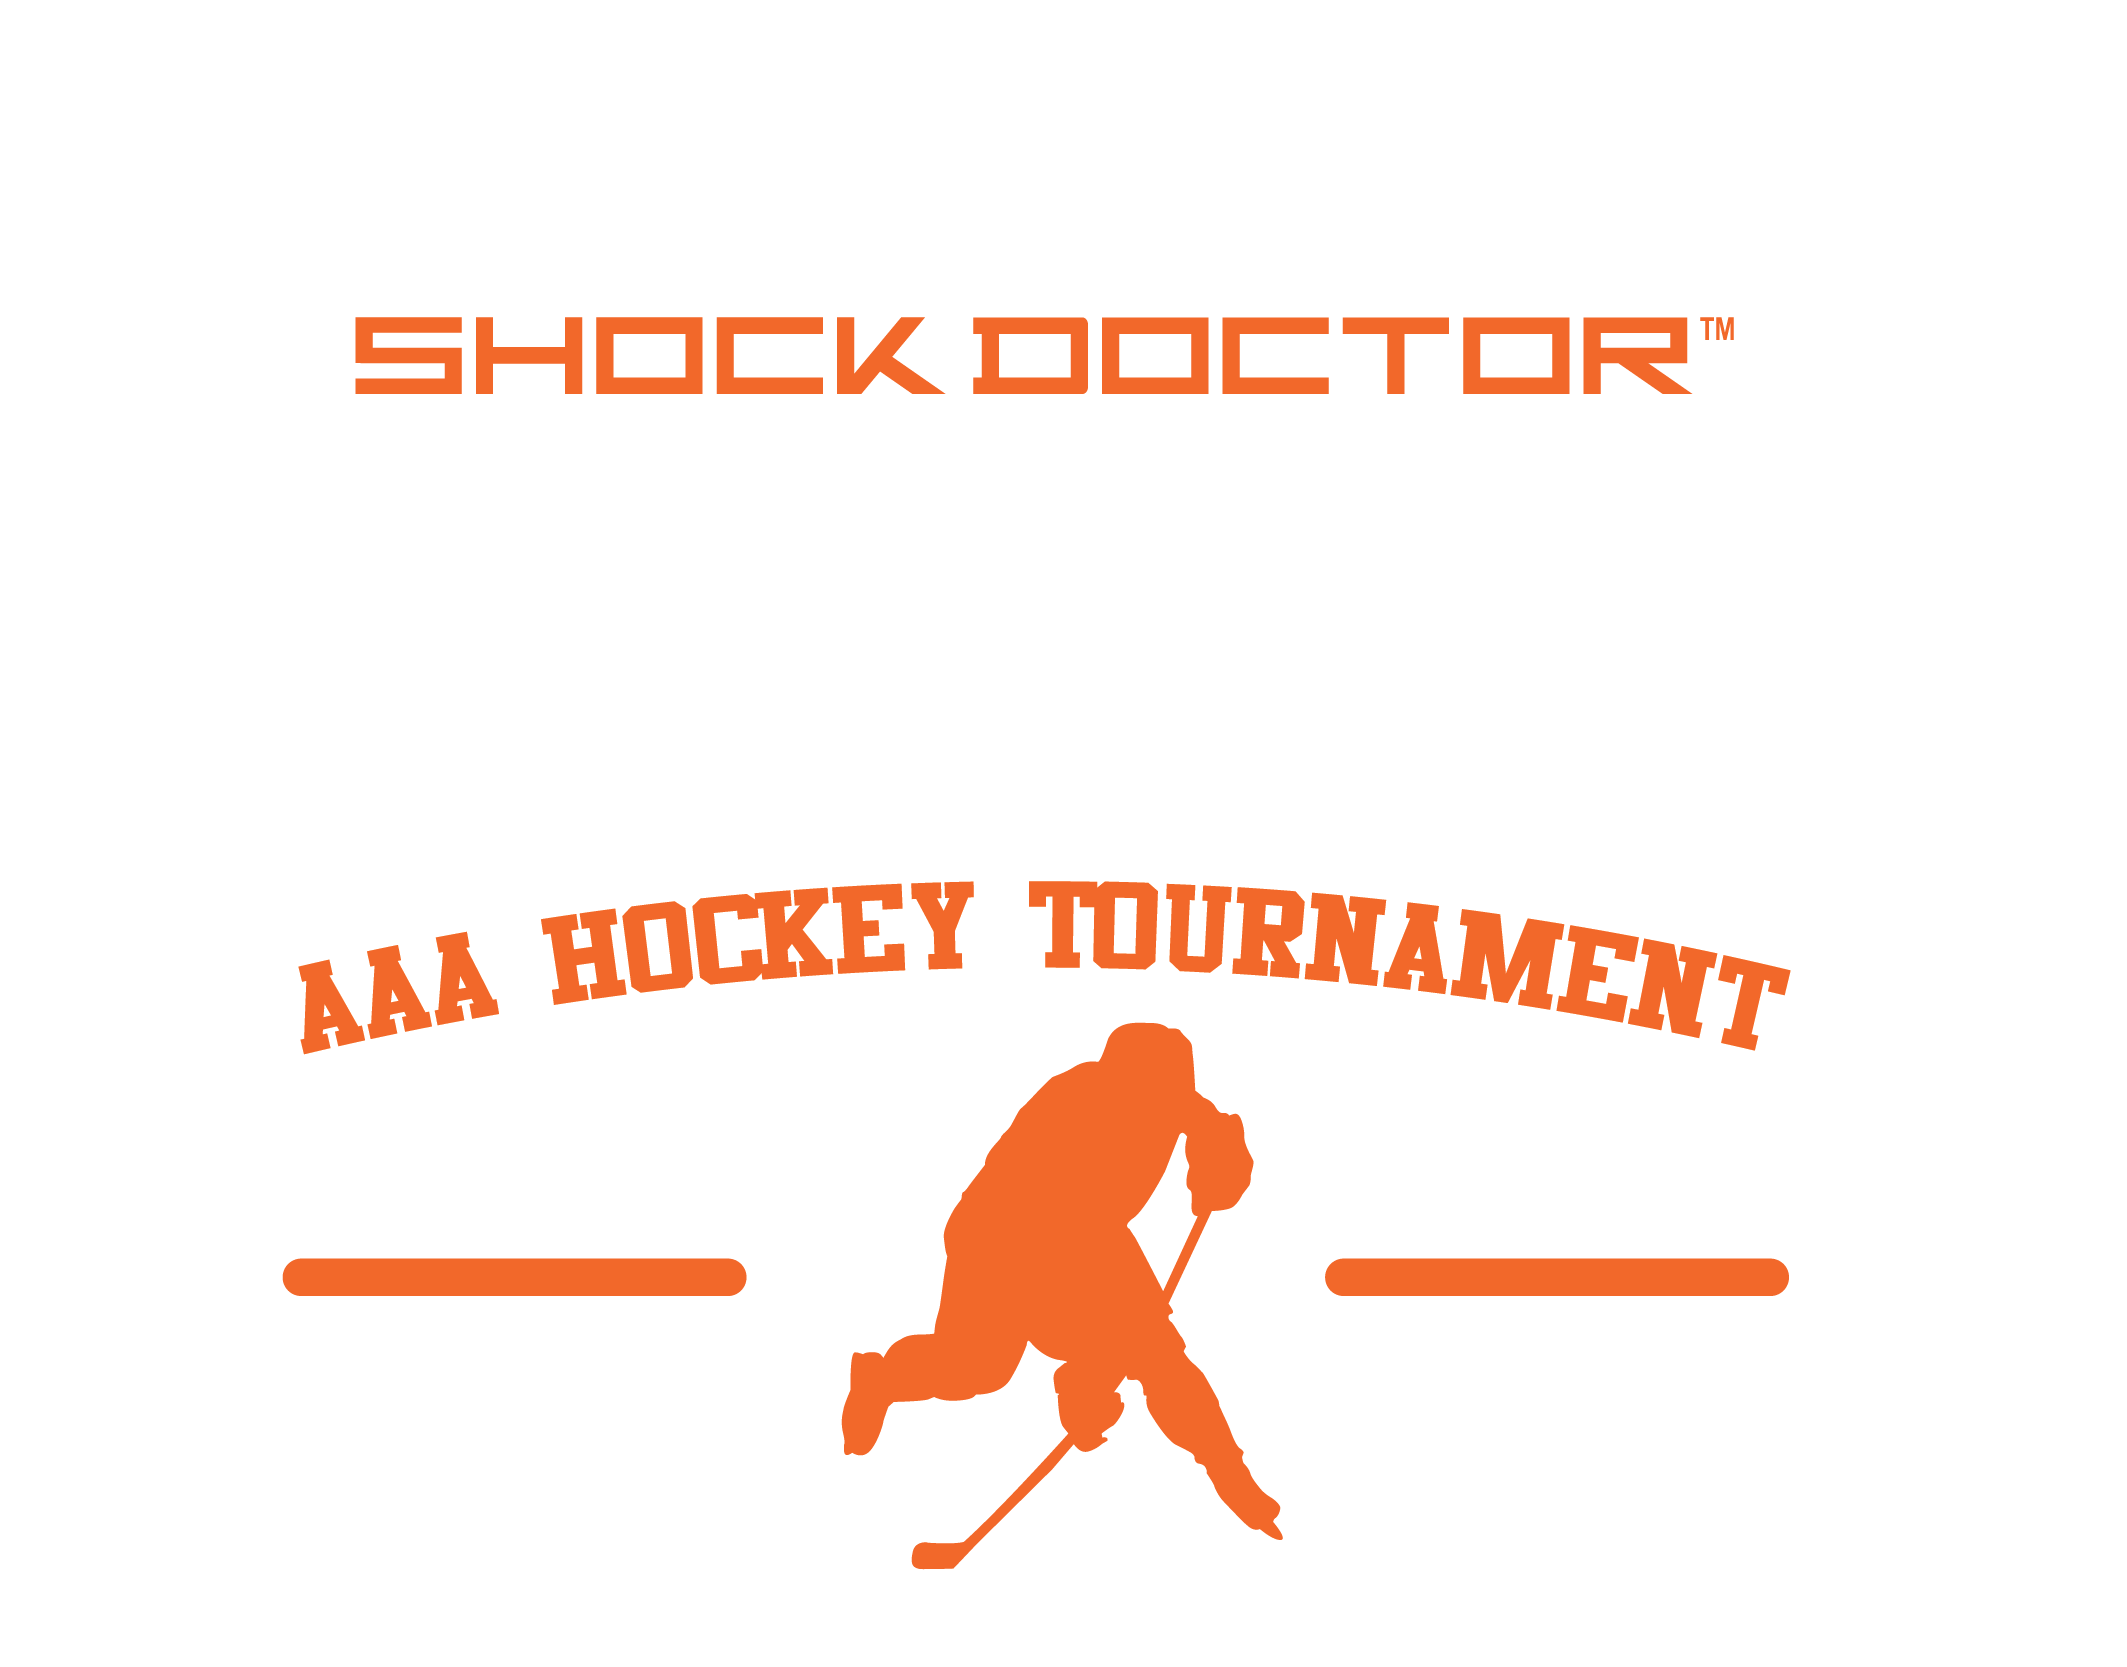 https://20502767.fs1.hubspotusercontent-na1.net/hubfs/20502767/New%20Event%20Logos/PH-Shock-Dr-Shootout_forblack.png